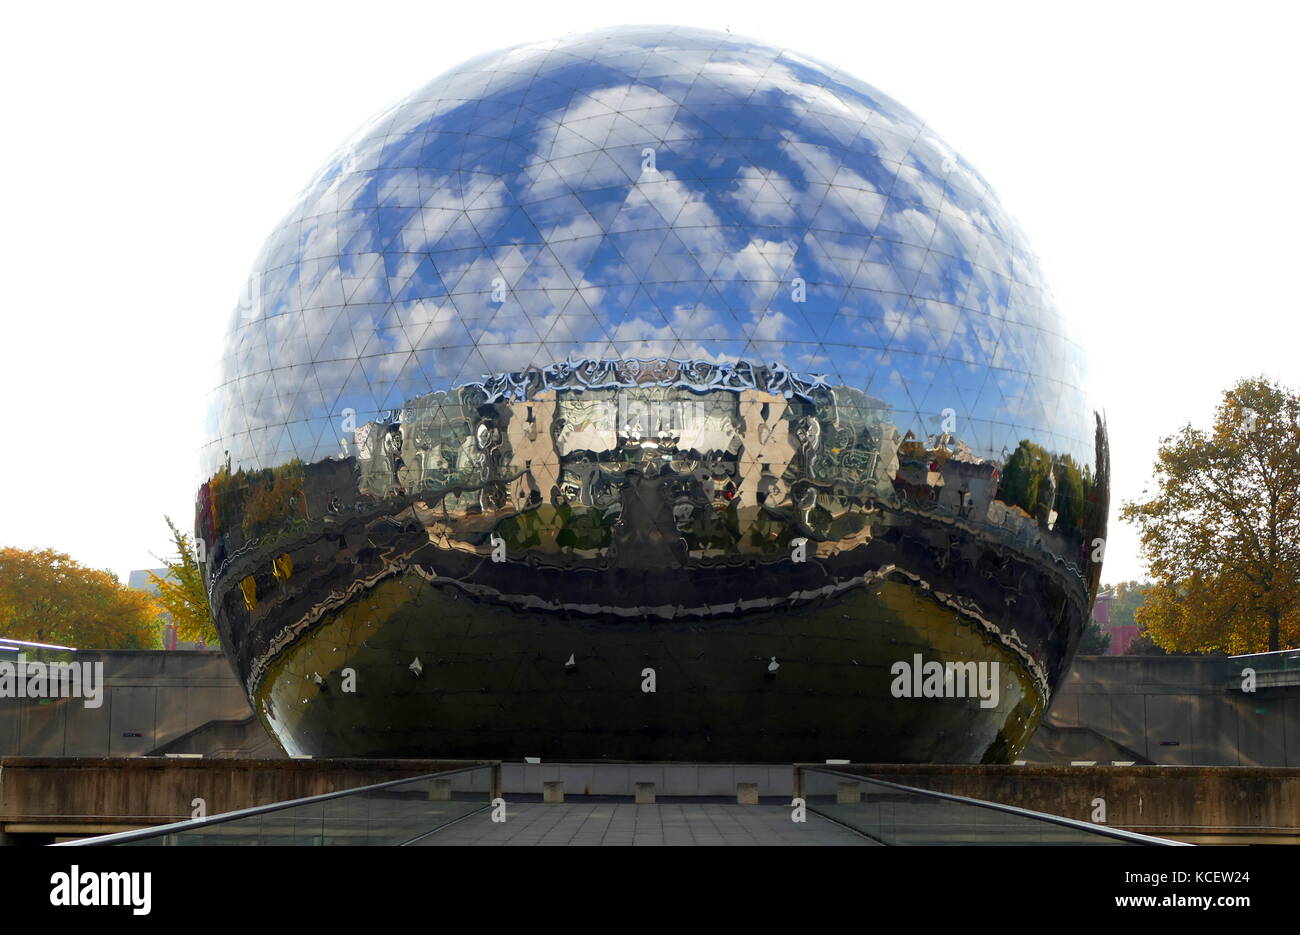 La Géode è rifinita a specchio di cupola geodetica aperto nel 1985 a Parigi. Essa detiene un Omnimax theatre nel Parc de la Villette a La Cité des Sciences et de l'Industrie (Città delle Scienze e dell'Industria) nel XIX arrondissement di Parigi, Francia. Foto Stock